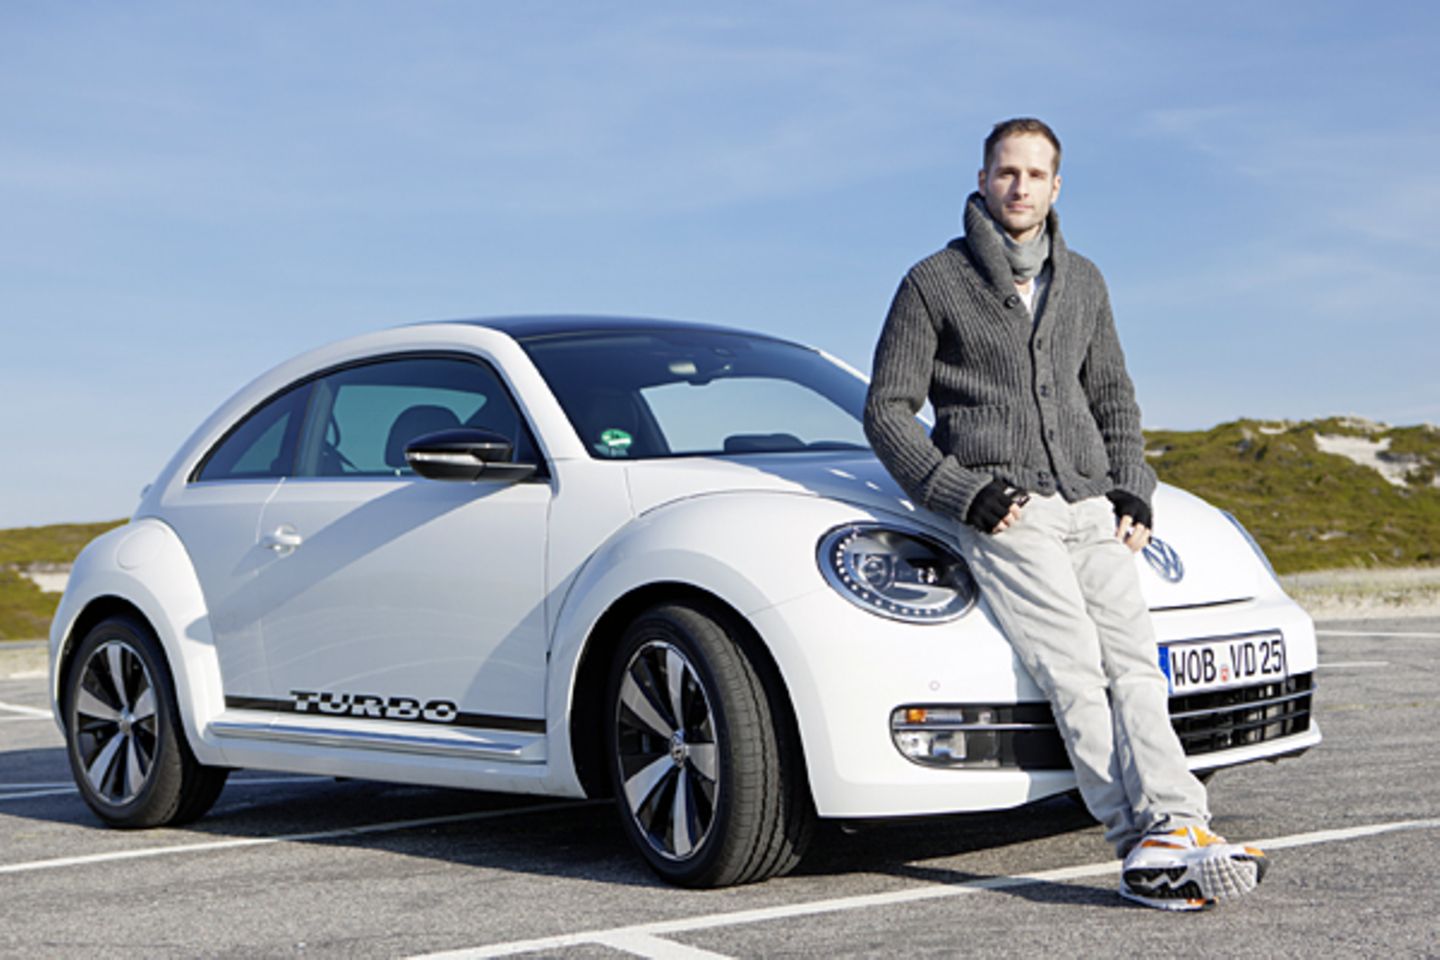 Lee Rychter cruist im VW Beetle über die Insel.